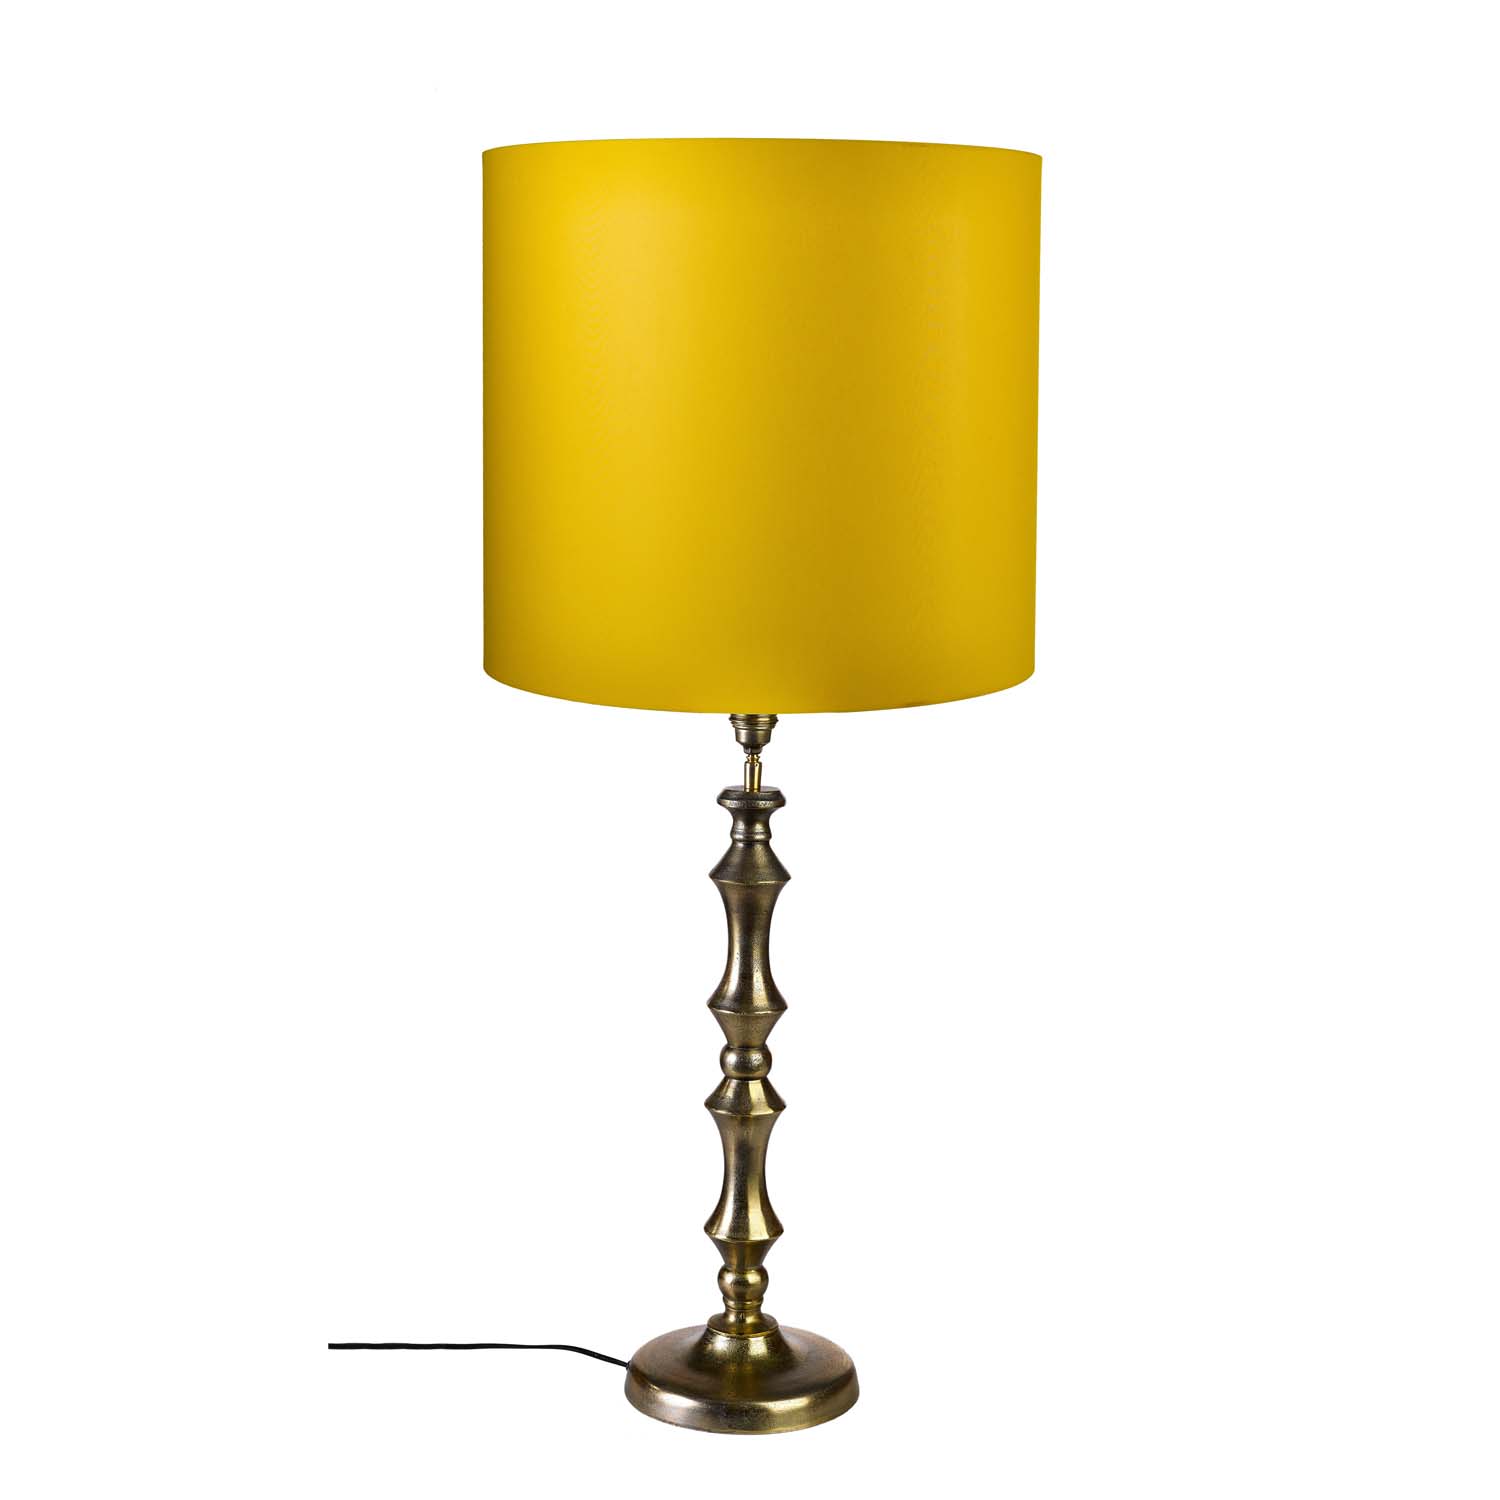 Pols Potten brass lamp